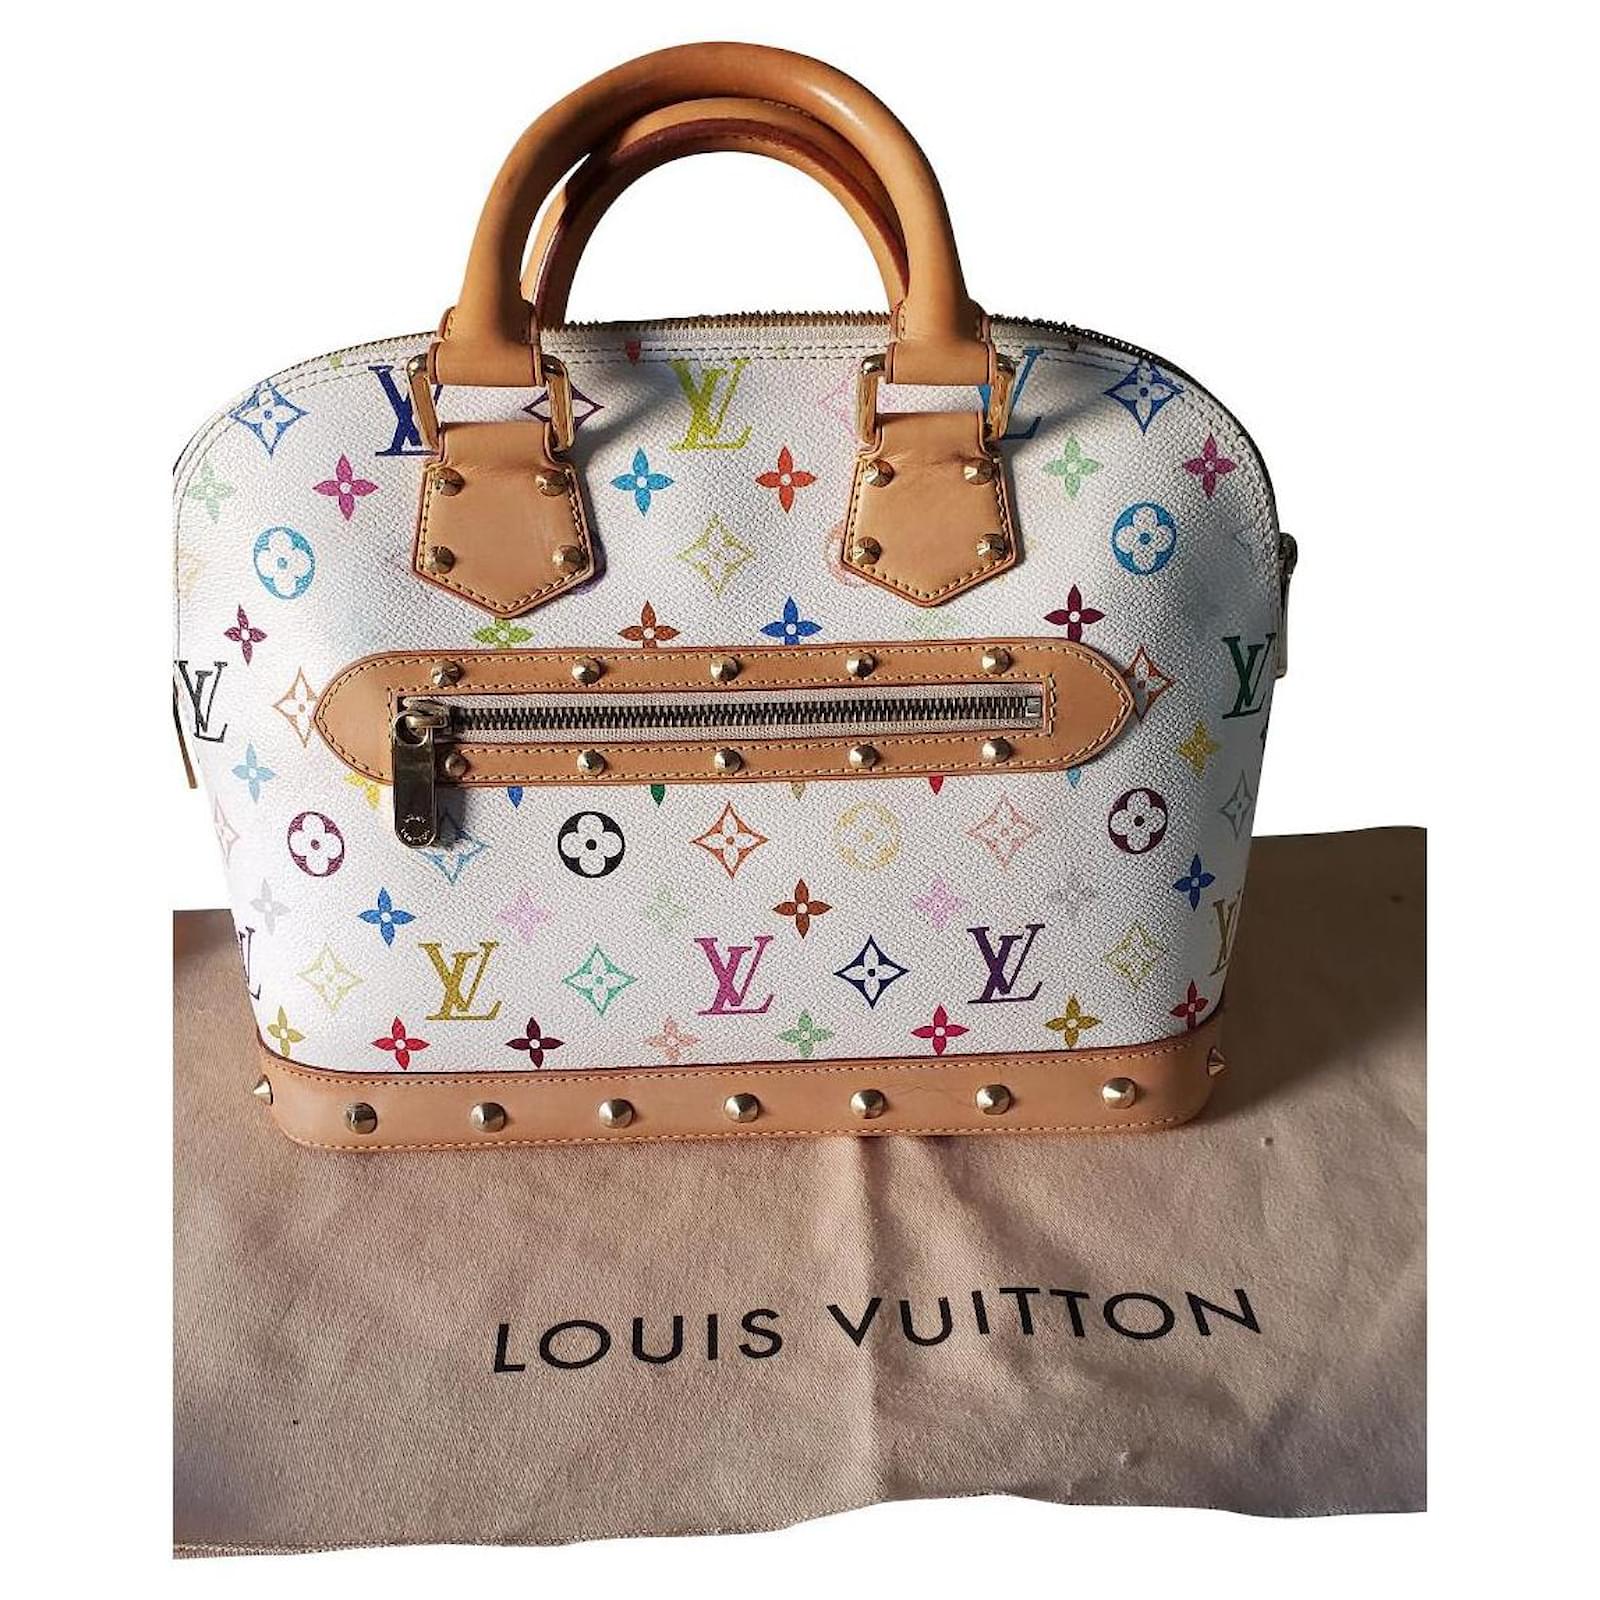 Louis Vuitton Candy Bag Charm